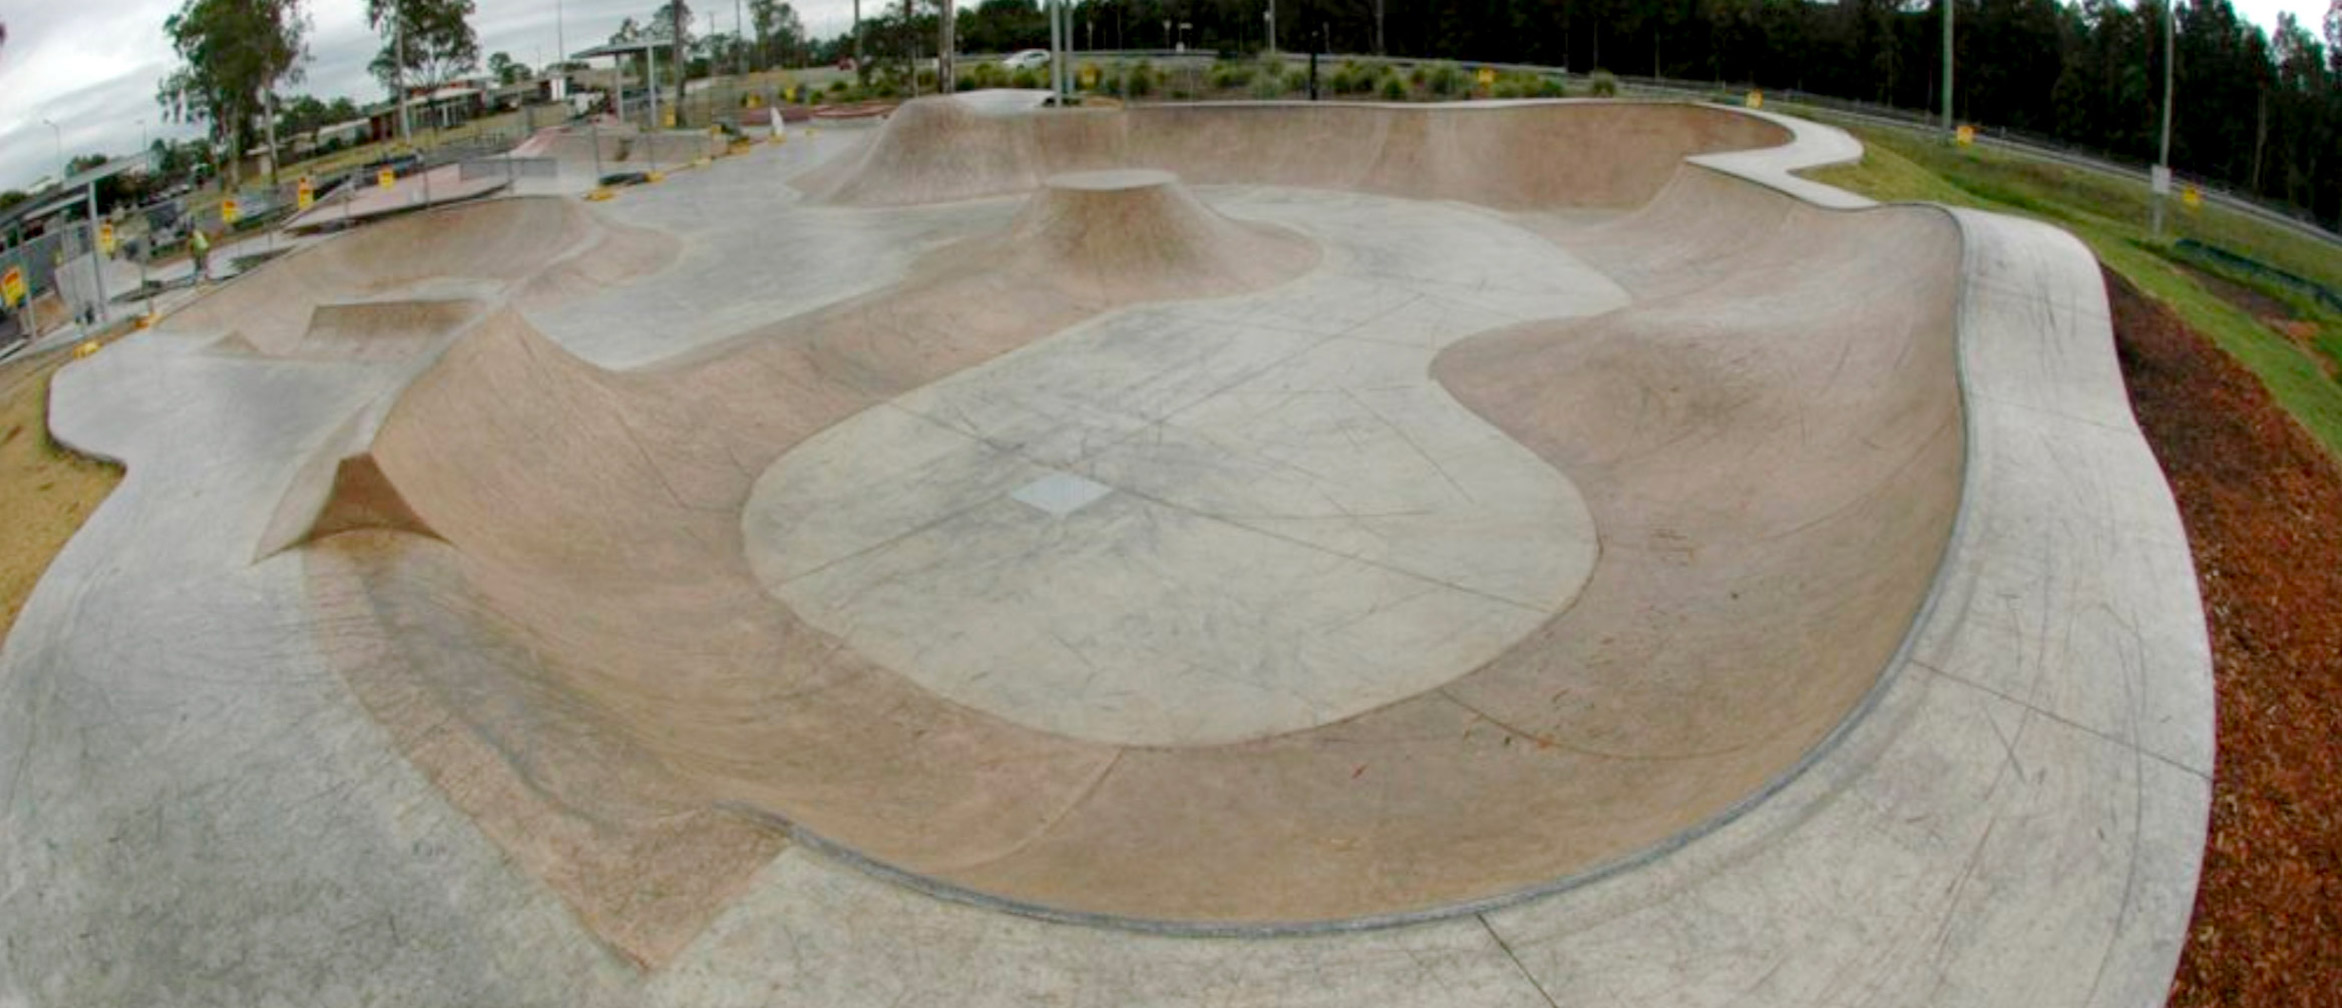 Ormeau skate park transition section, Concrete Skateparks build